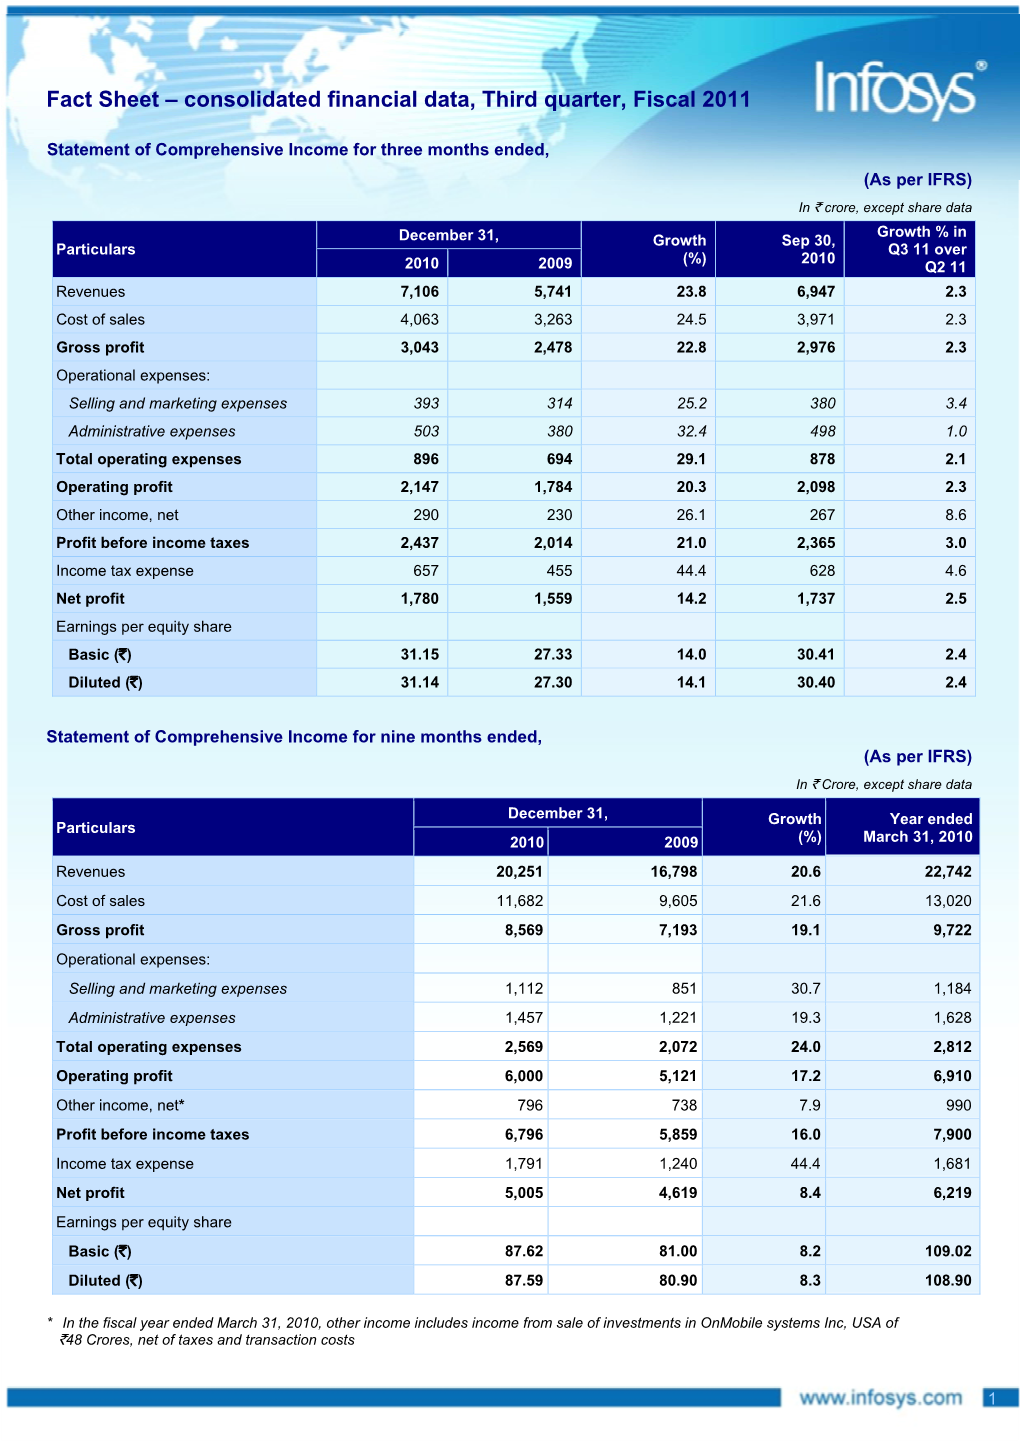 Fact Sheet – Consolidated Financial Data, Third Quarter, Fiscal 2011